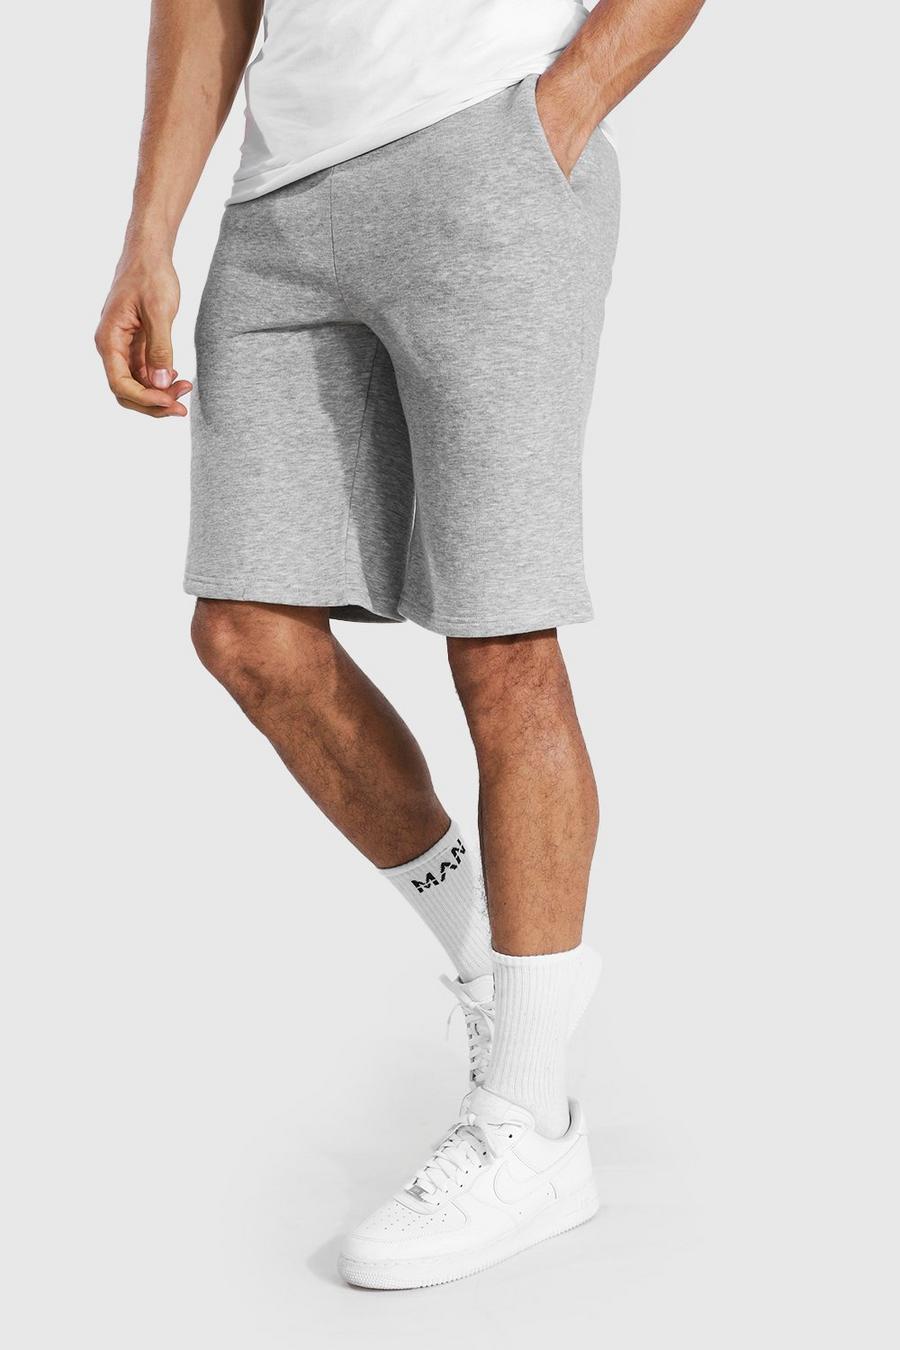 Womens Clothing Shorts Cargo shorts Grey Boohoo Denim Tall Mid Length Jersey Cargo Shorts in Grey Marl 